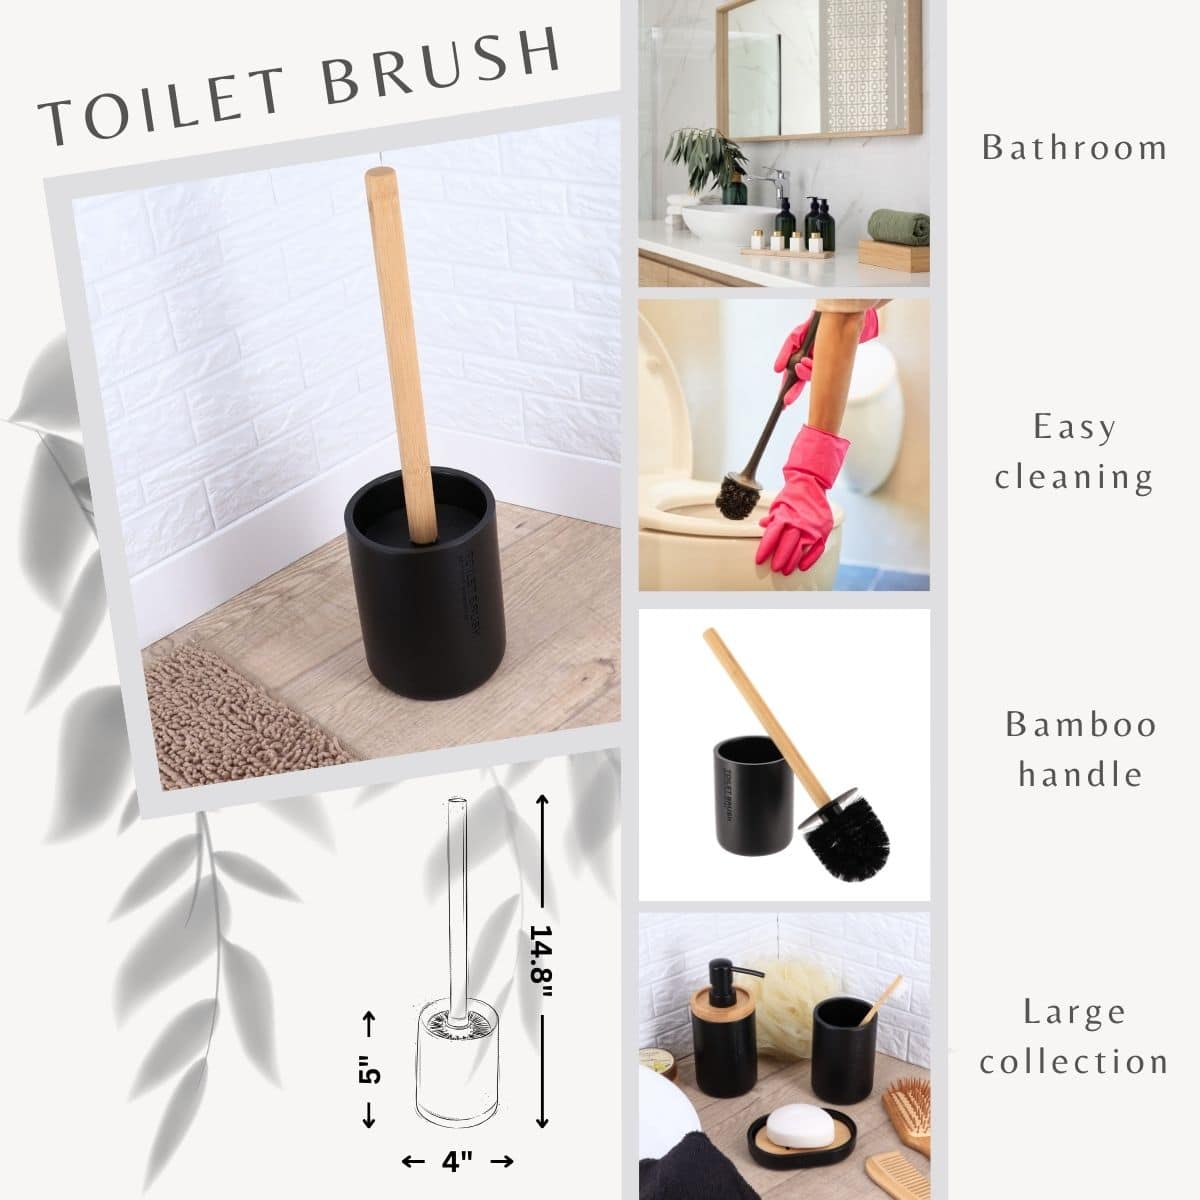 Versatile wooden onyx black toilet brush and holder set for bathroom restroom easy cleaning